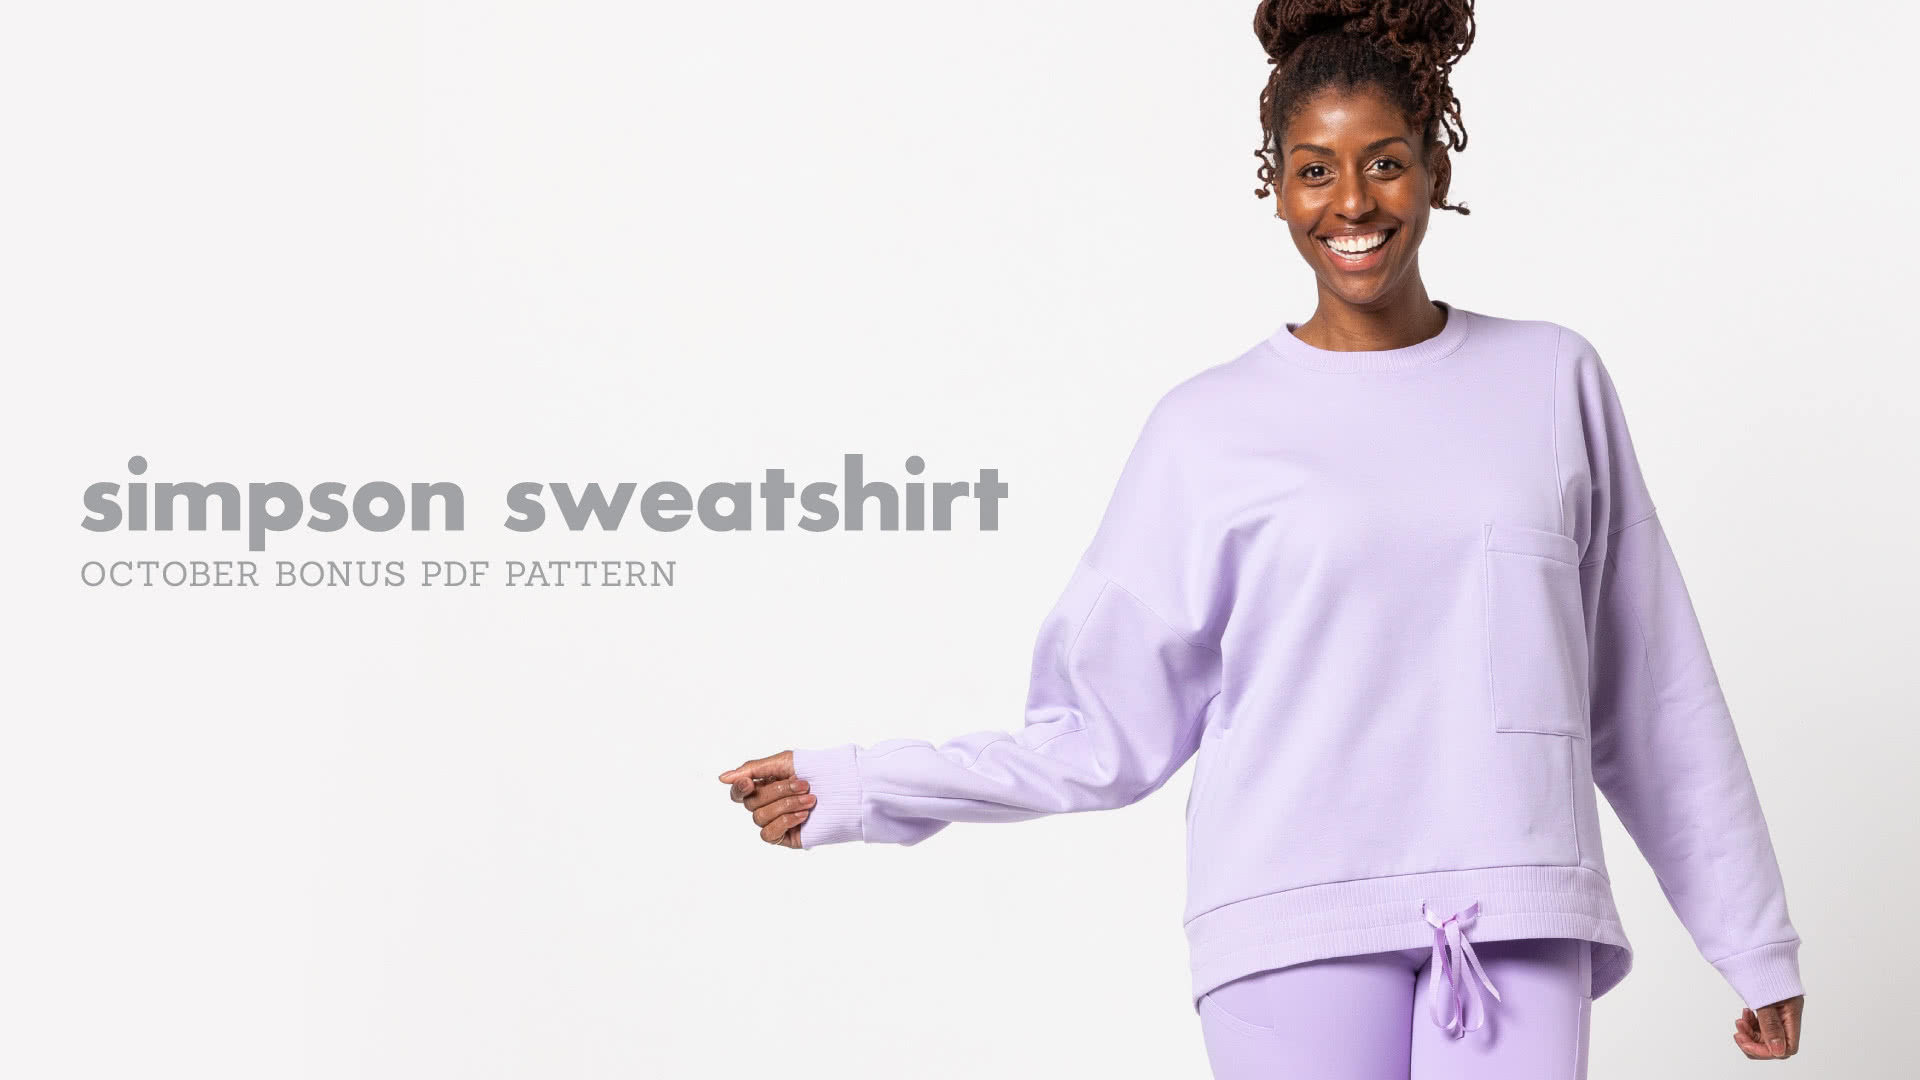 Simpson Sweatshirt PDF